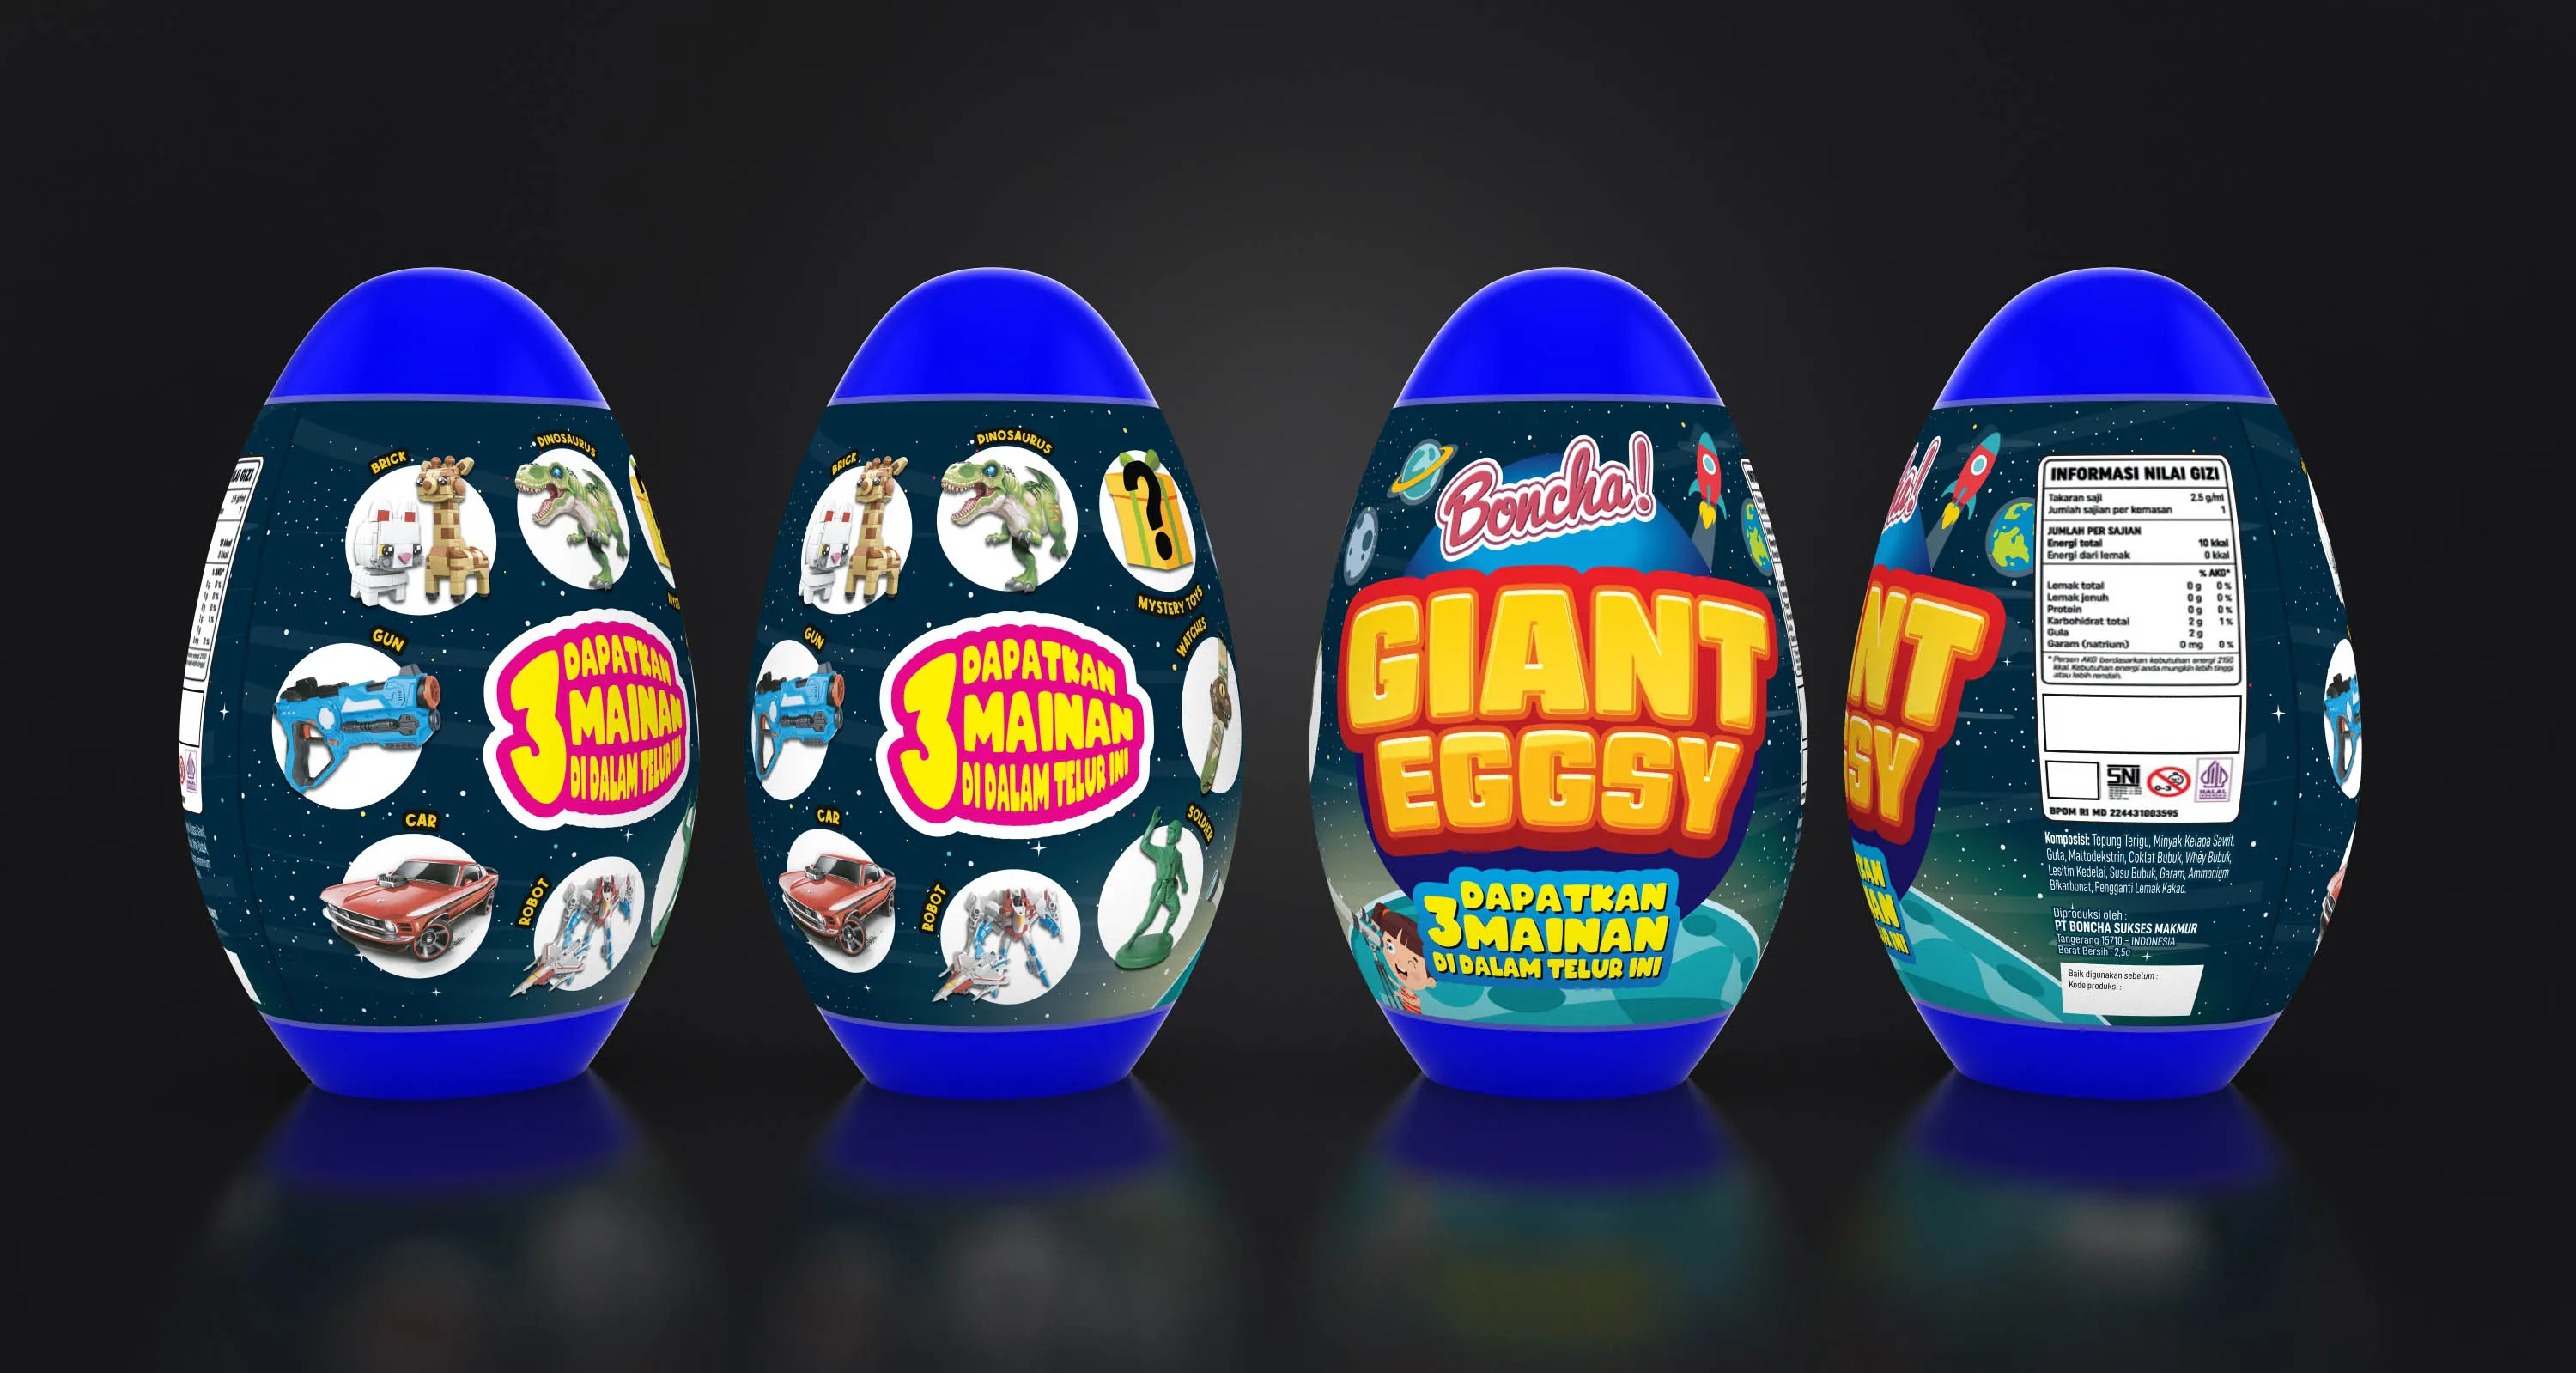 Kontes Desain Label Untuk Mainan Anak "Giant Eggssy" by Boncha